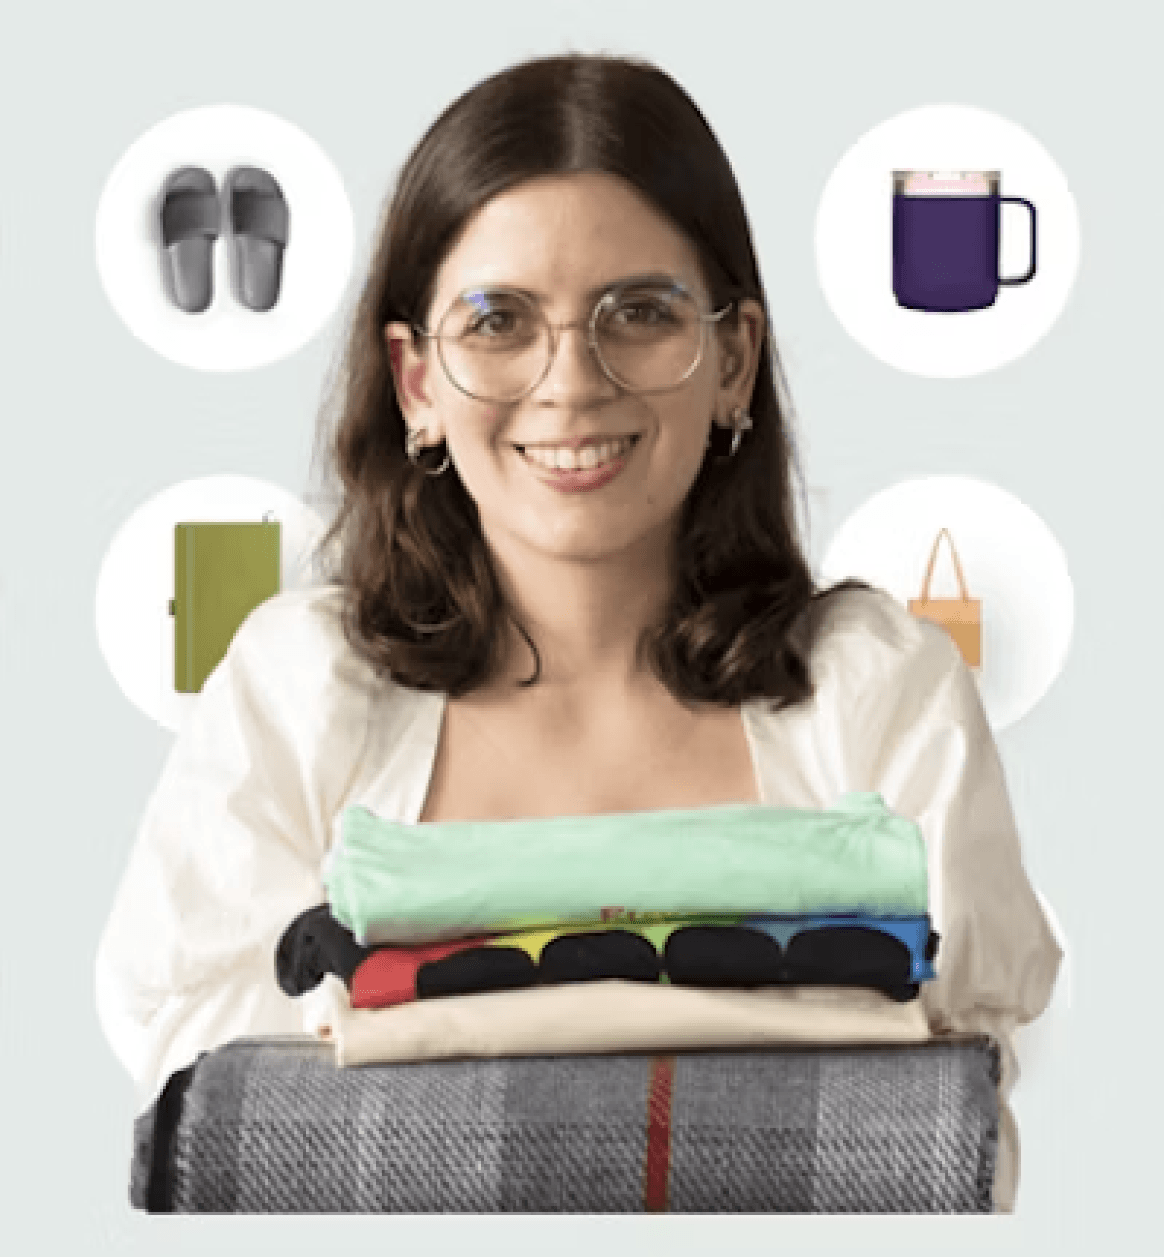 Print On Demand Bags & Backpacks | Design & Print Custom Tote Bags ...